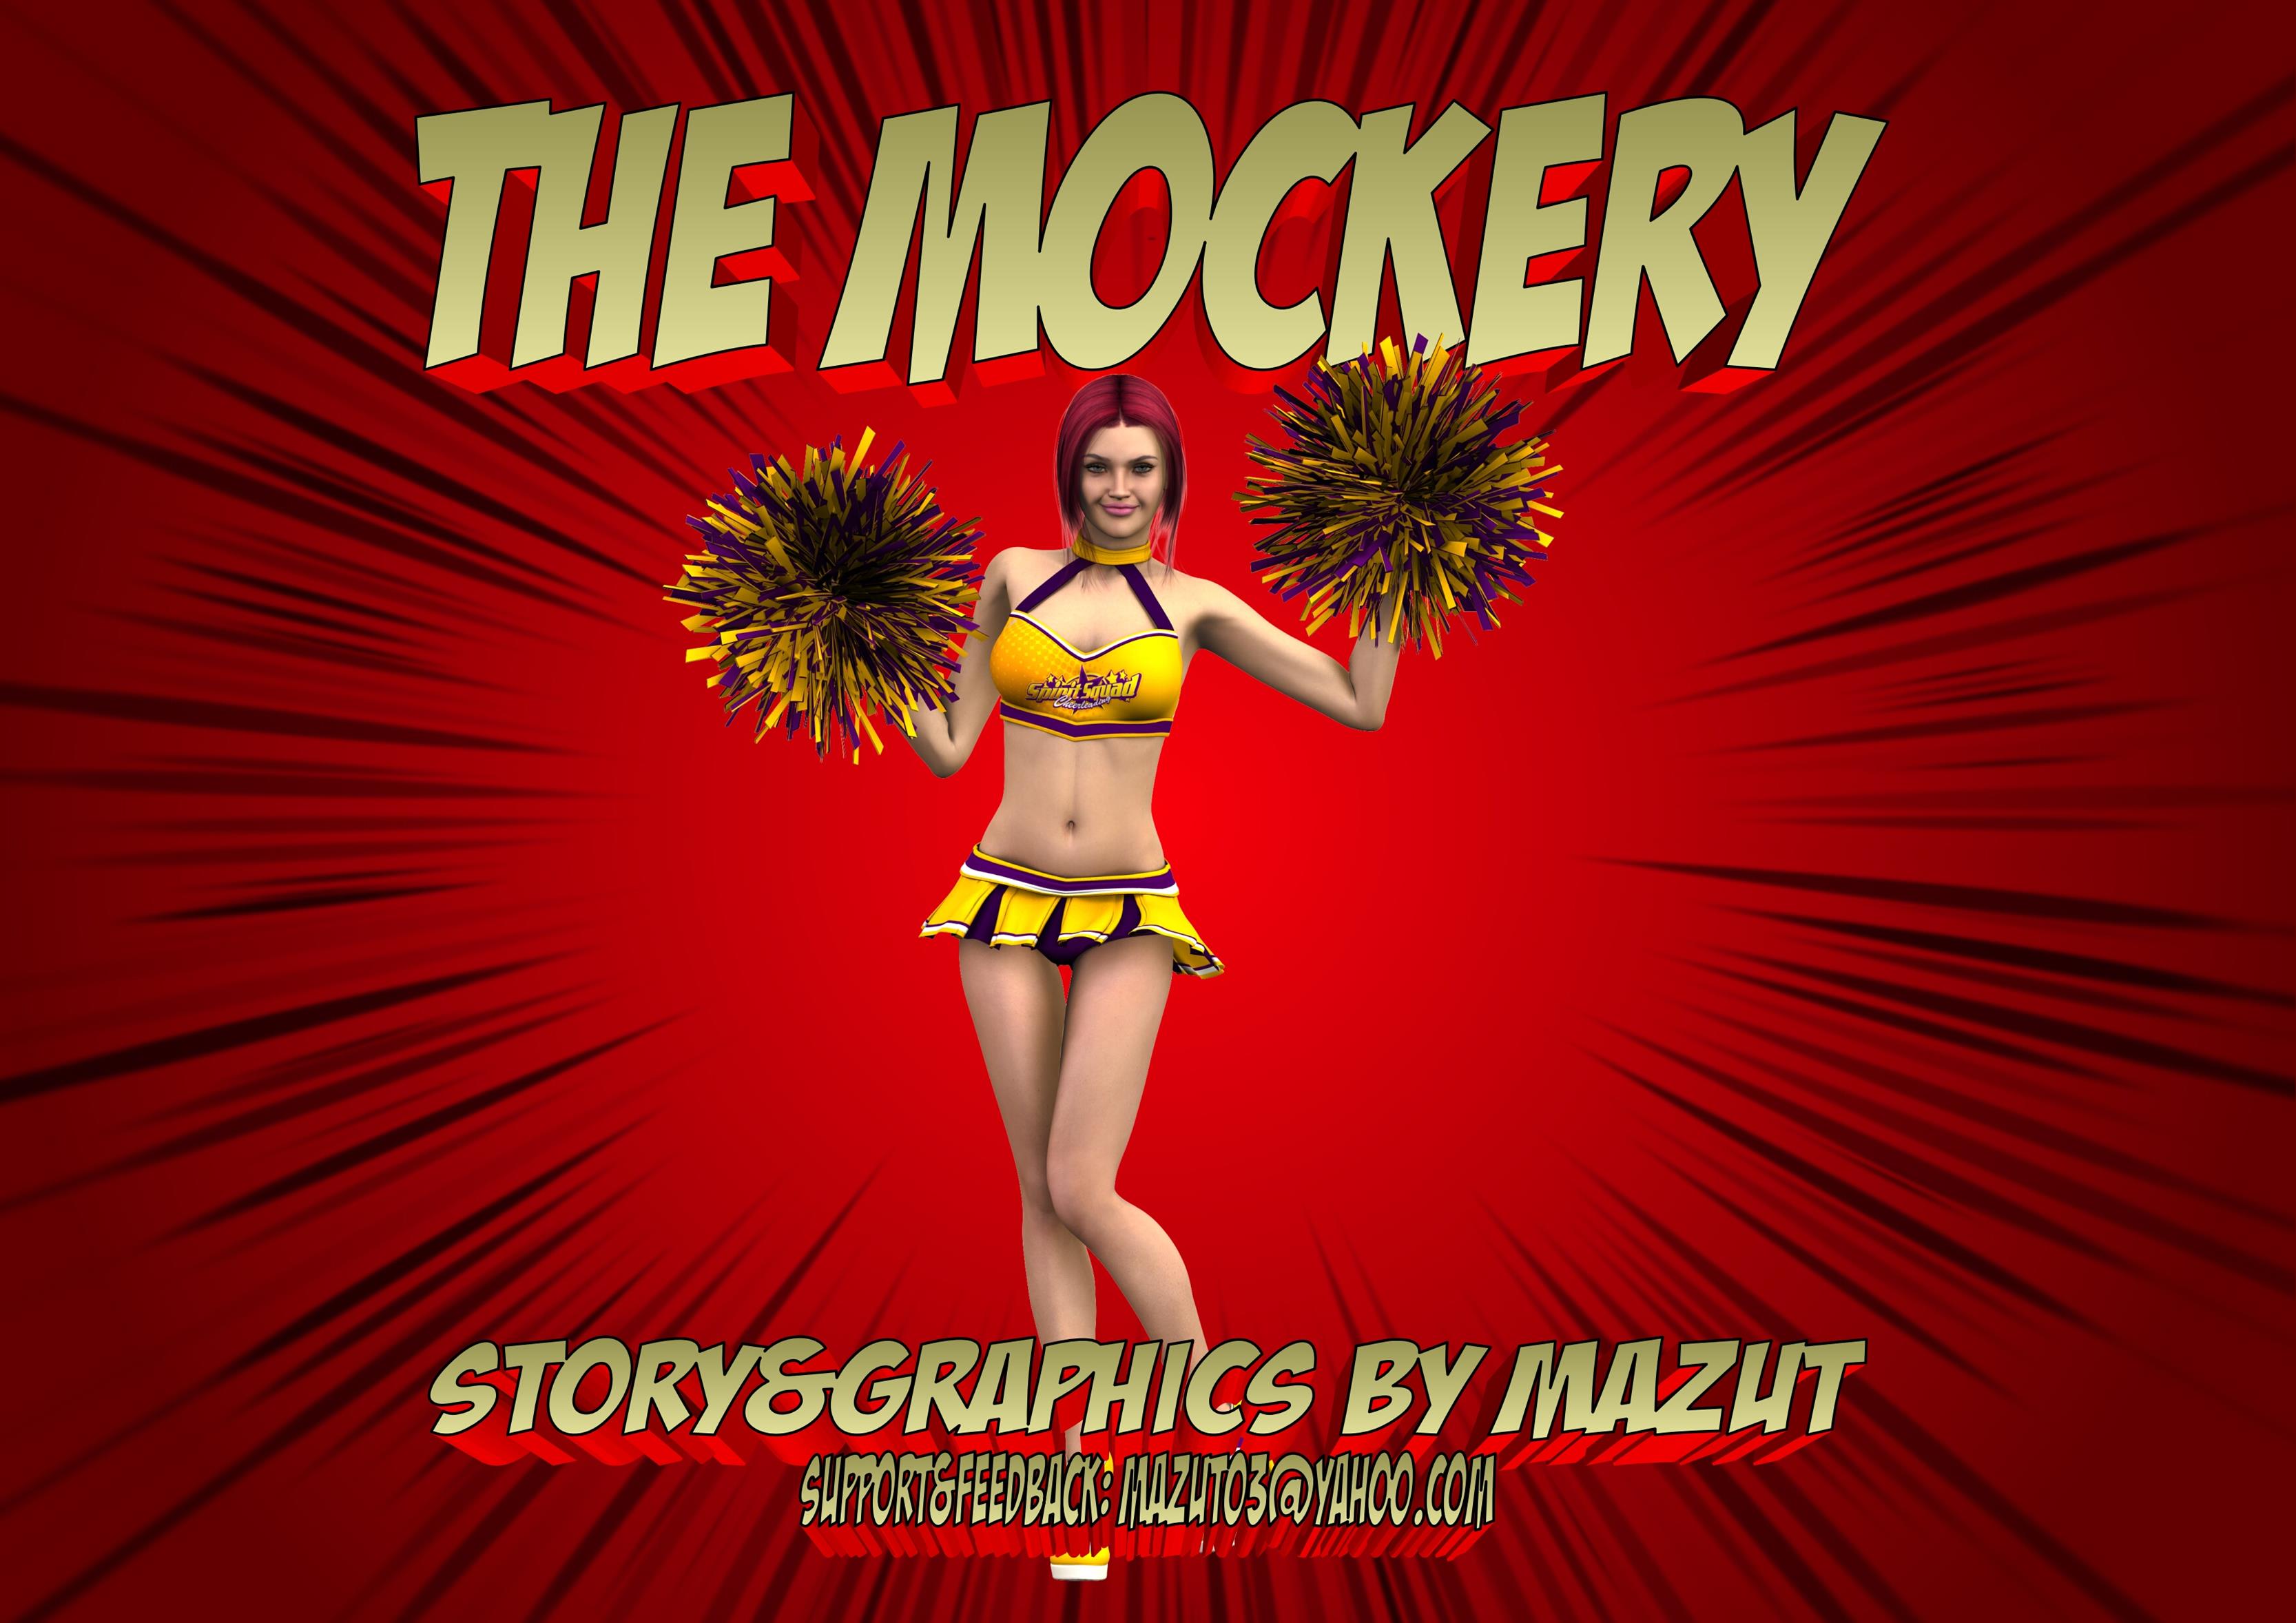 Mazut – The Mockery